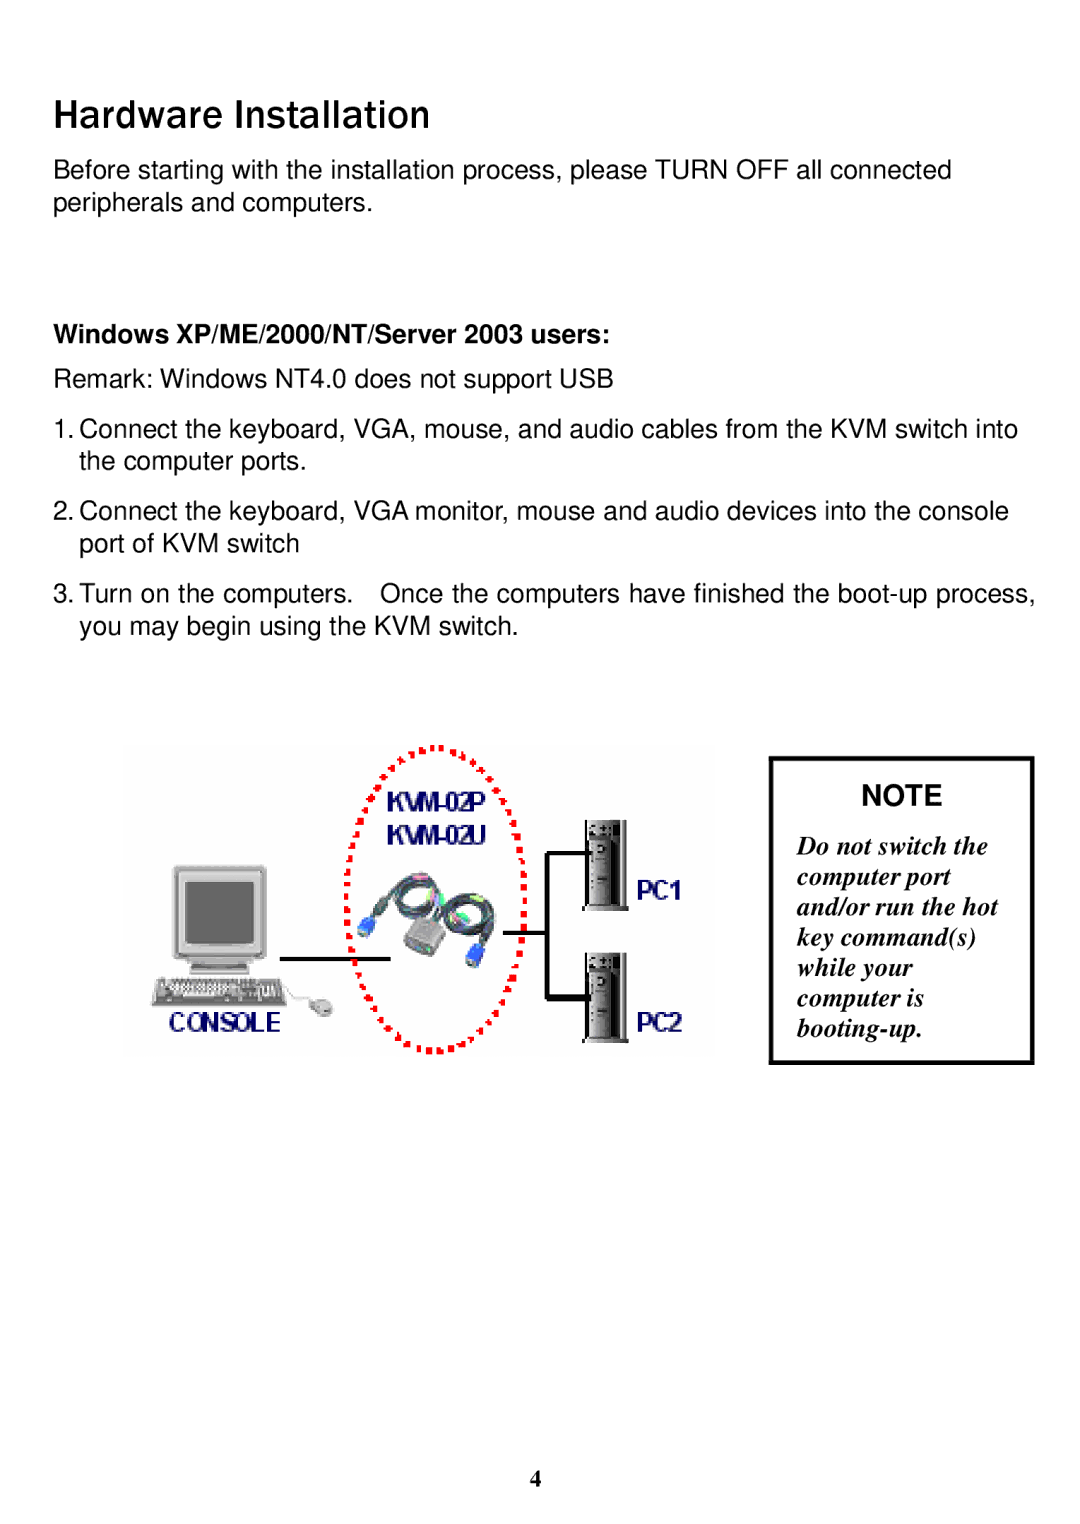 Freedom9 KVM-02 manual Hardware Installation, Windows XP/ME/2000/NT/Server 2003 users 